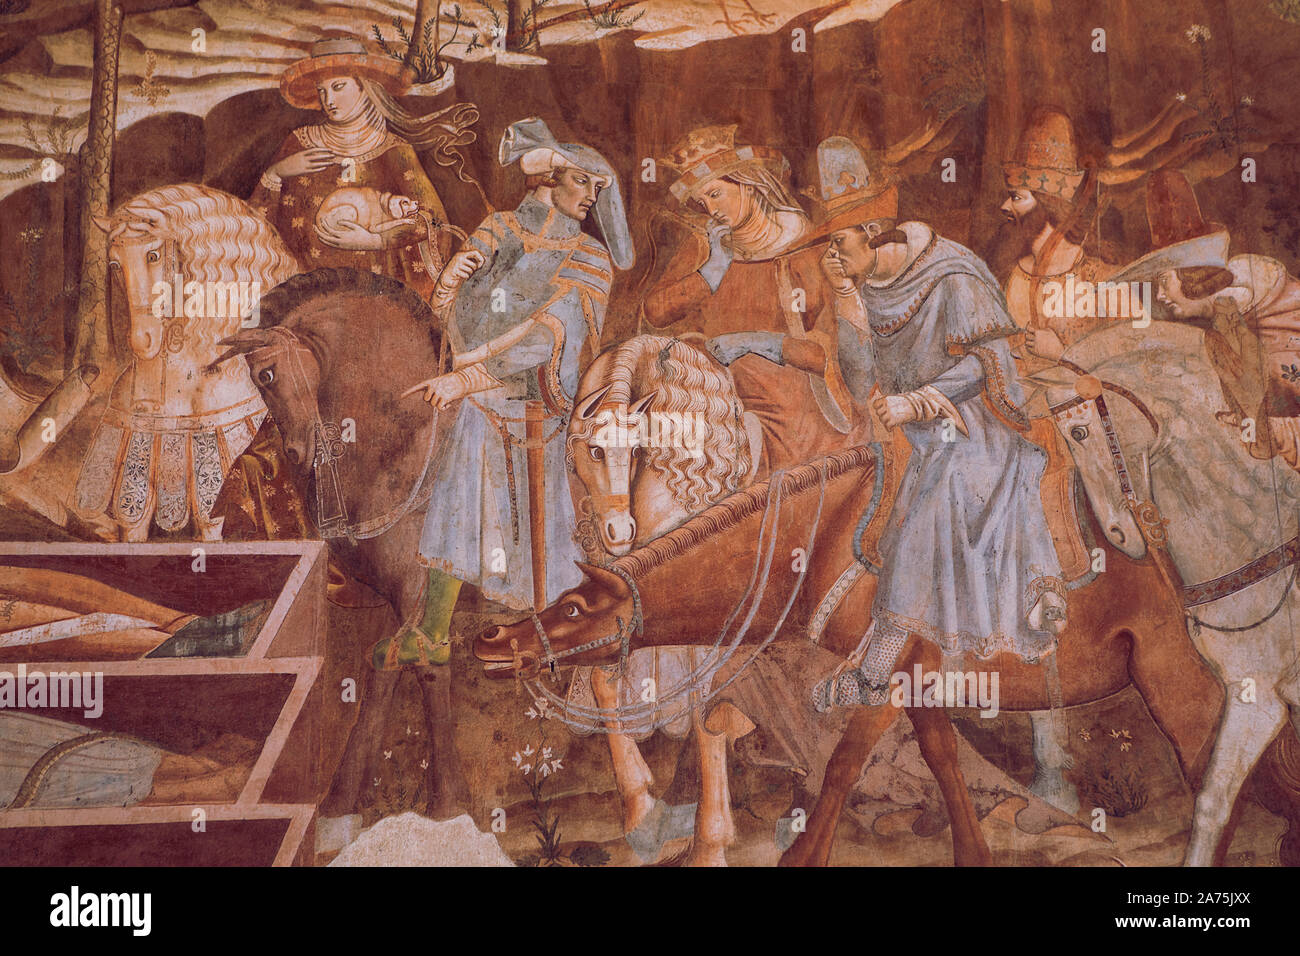 Detail of italian fresco "Triumph of Death", "Last Judgement" by Buonamico Buffalmacco, 1336-1341, renovated fresco inside the Campo Santo, Pisa Ital Stock Photo